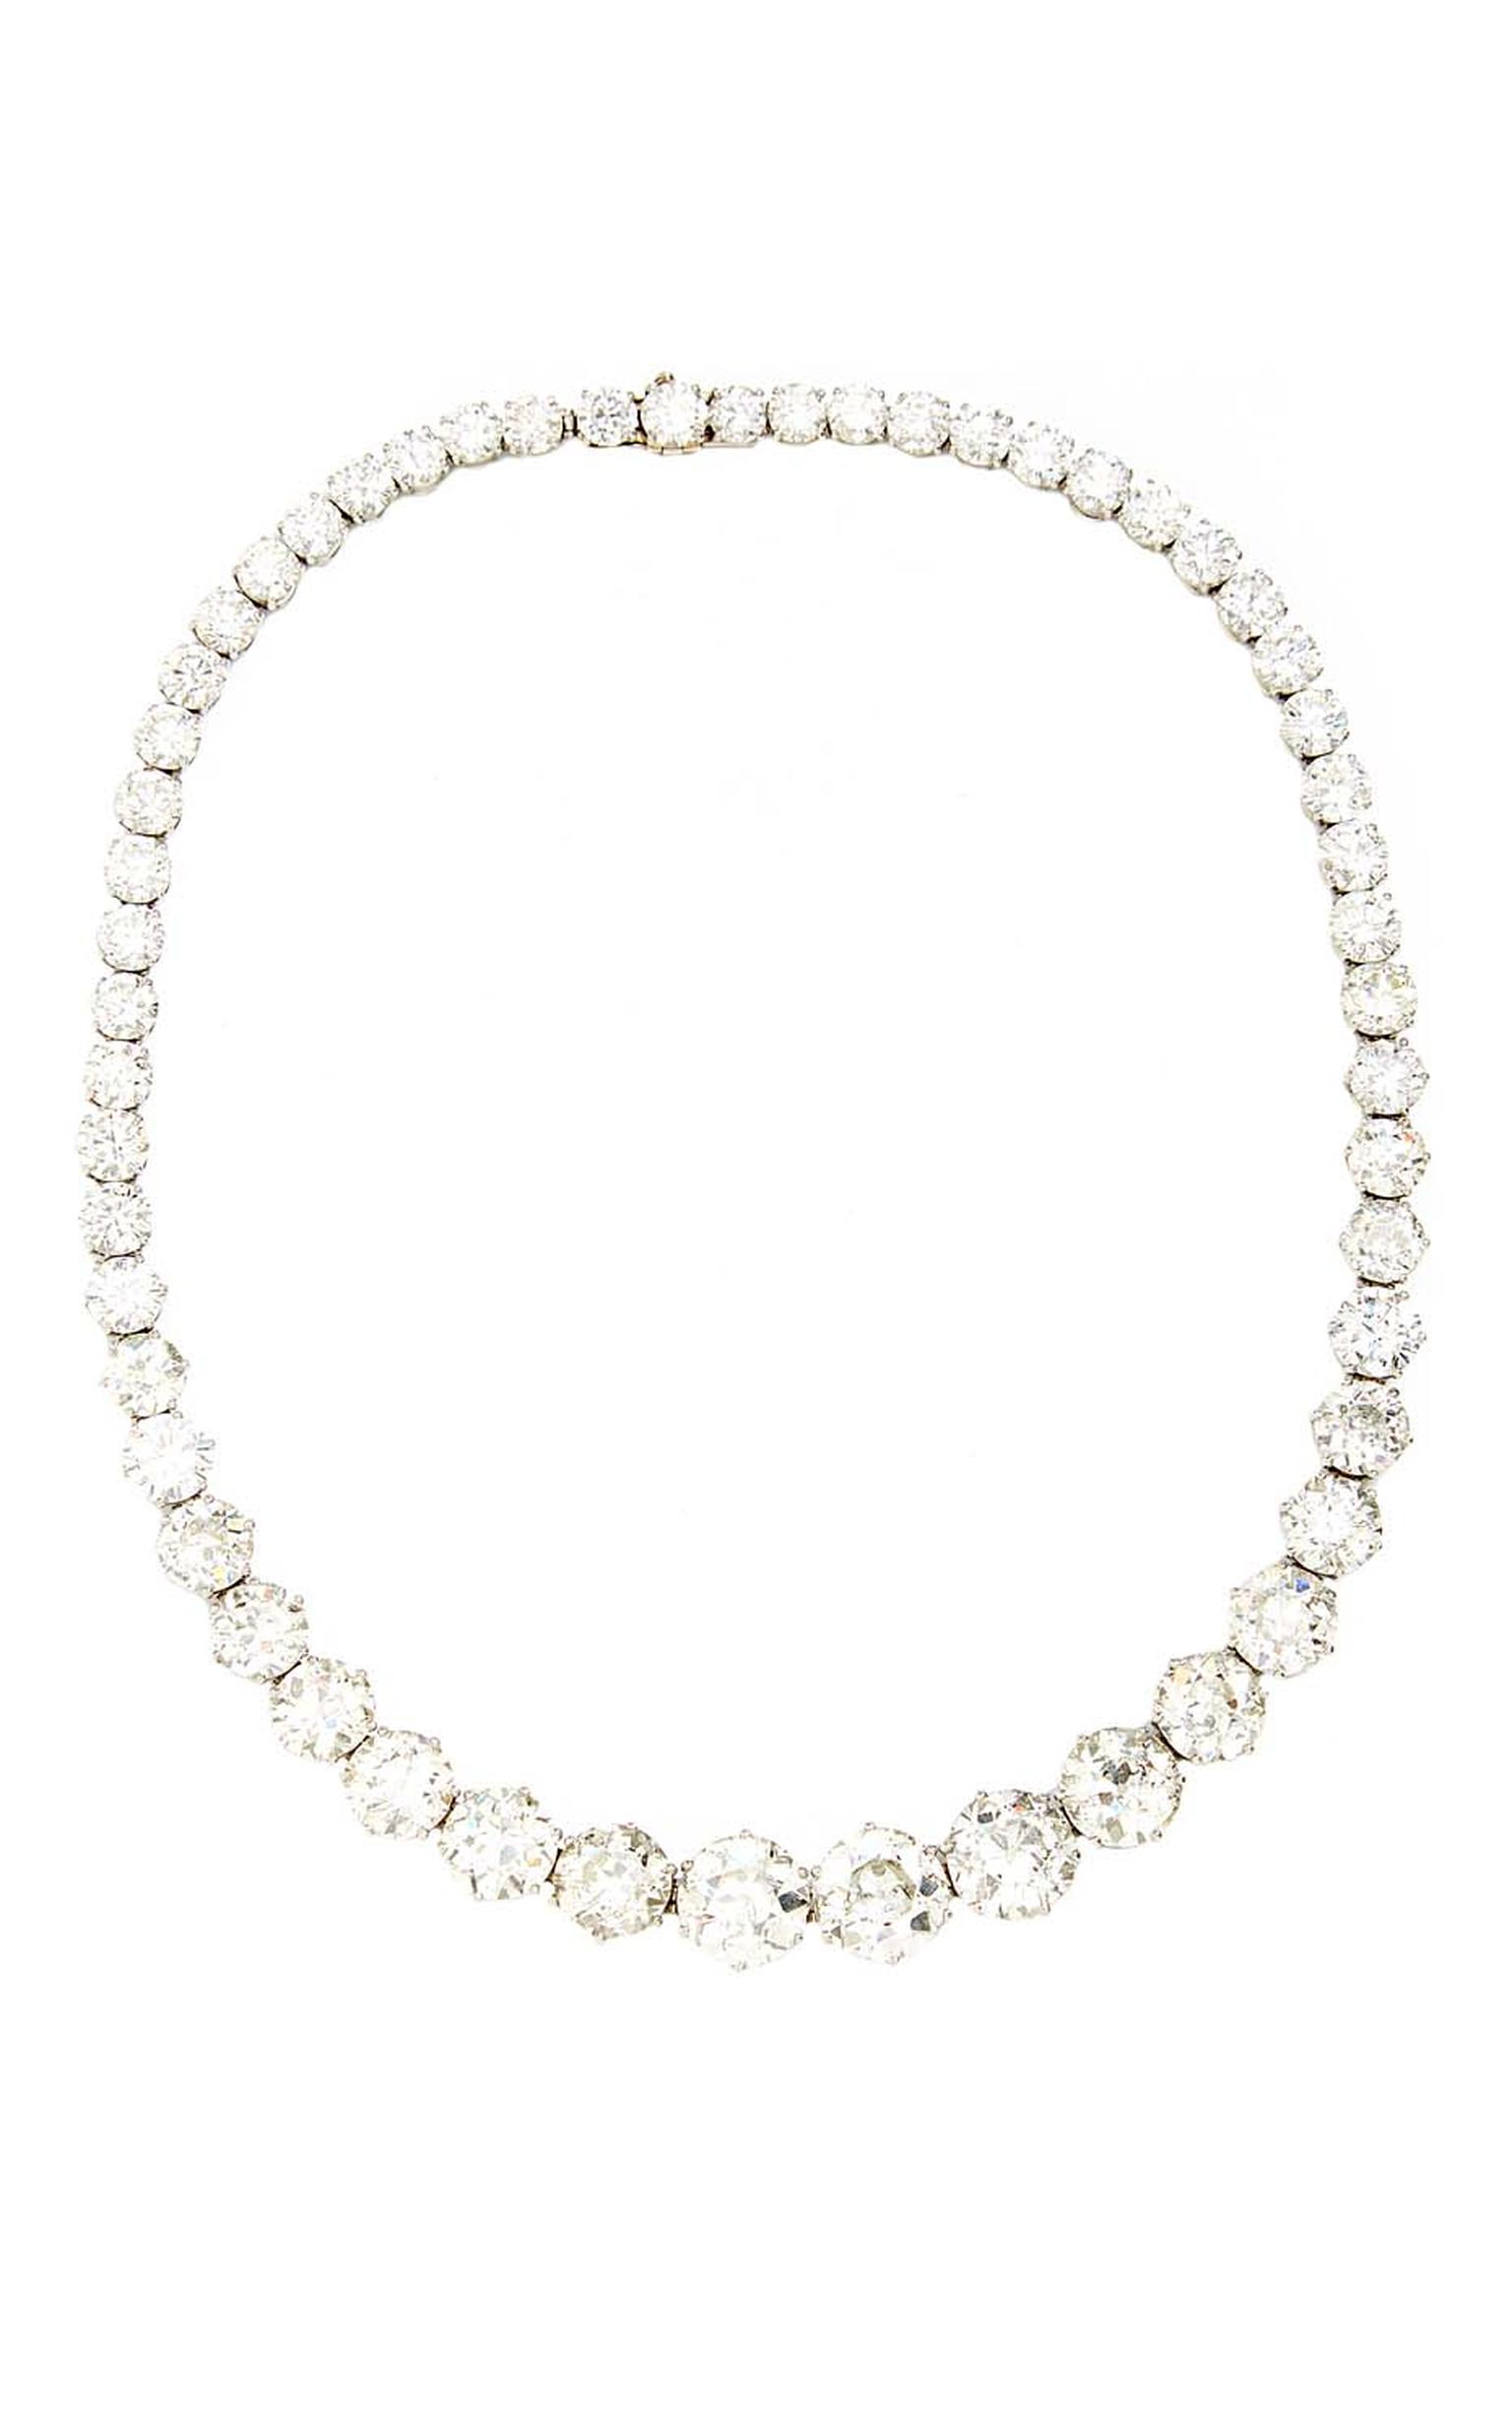 Moda Operandi's Latest Hermès Sale Includes $185,000 Diamond